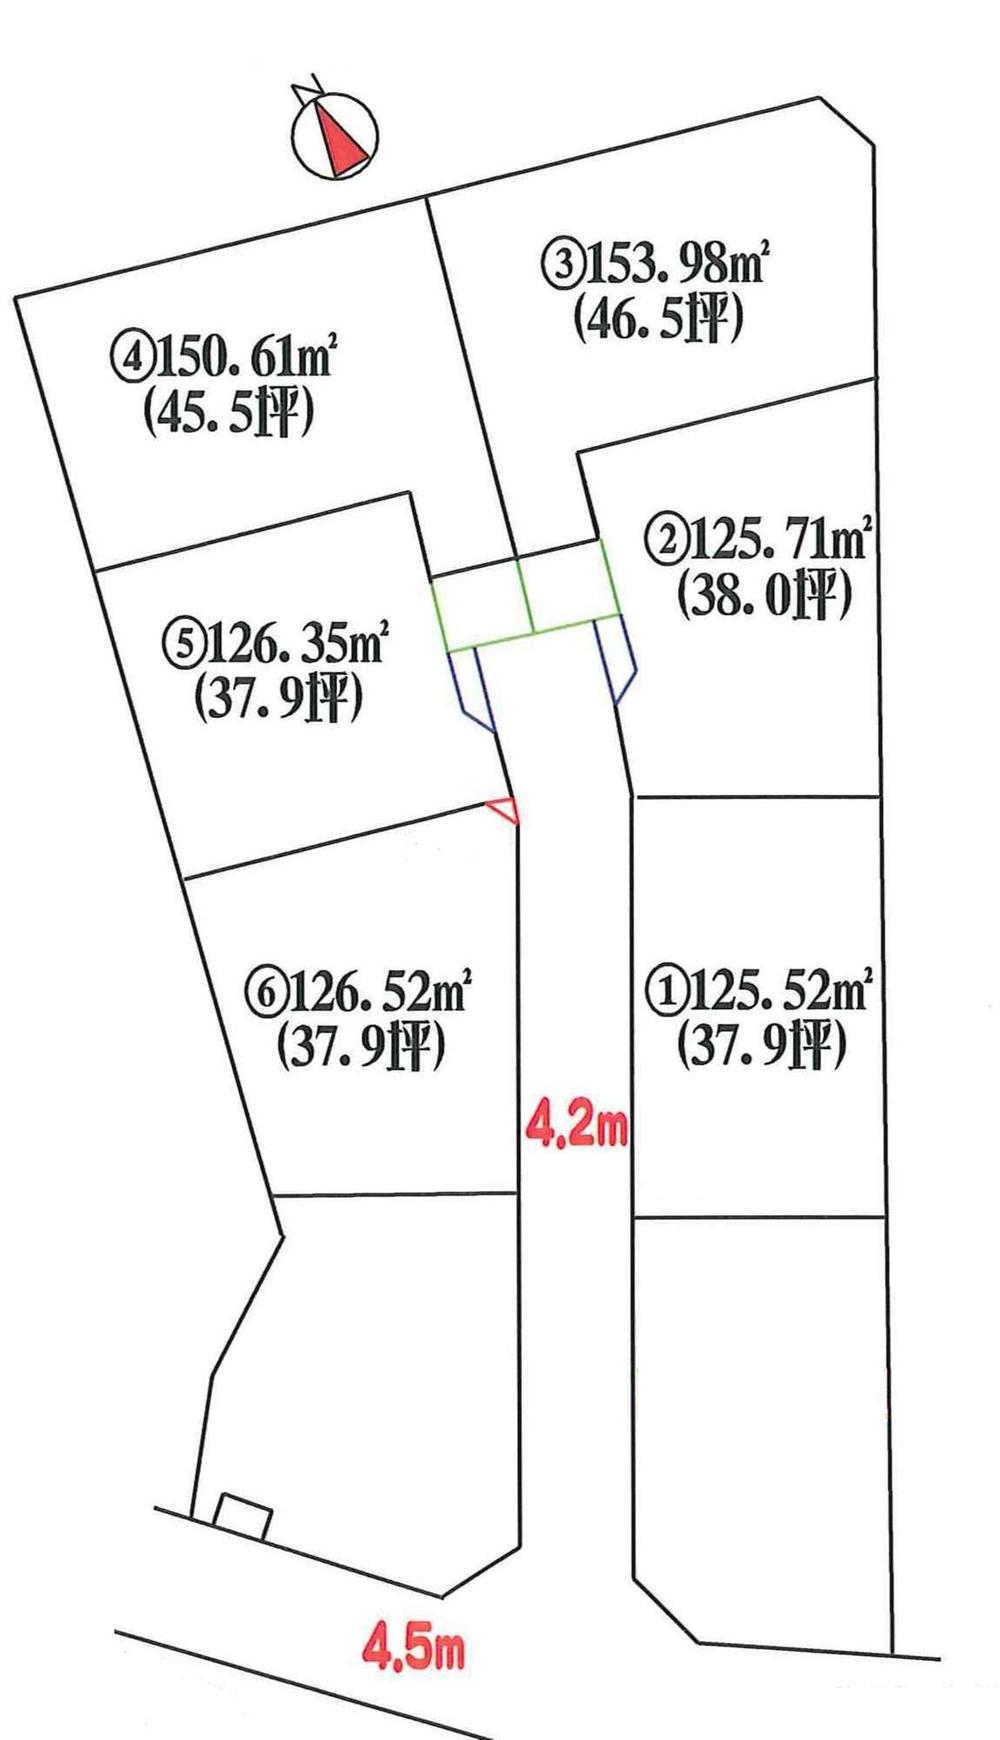 Compartment figure. Land price 10.9 million yen, Land area 126.52 sq m